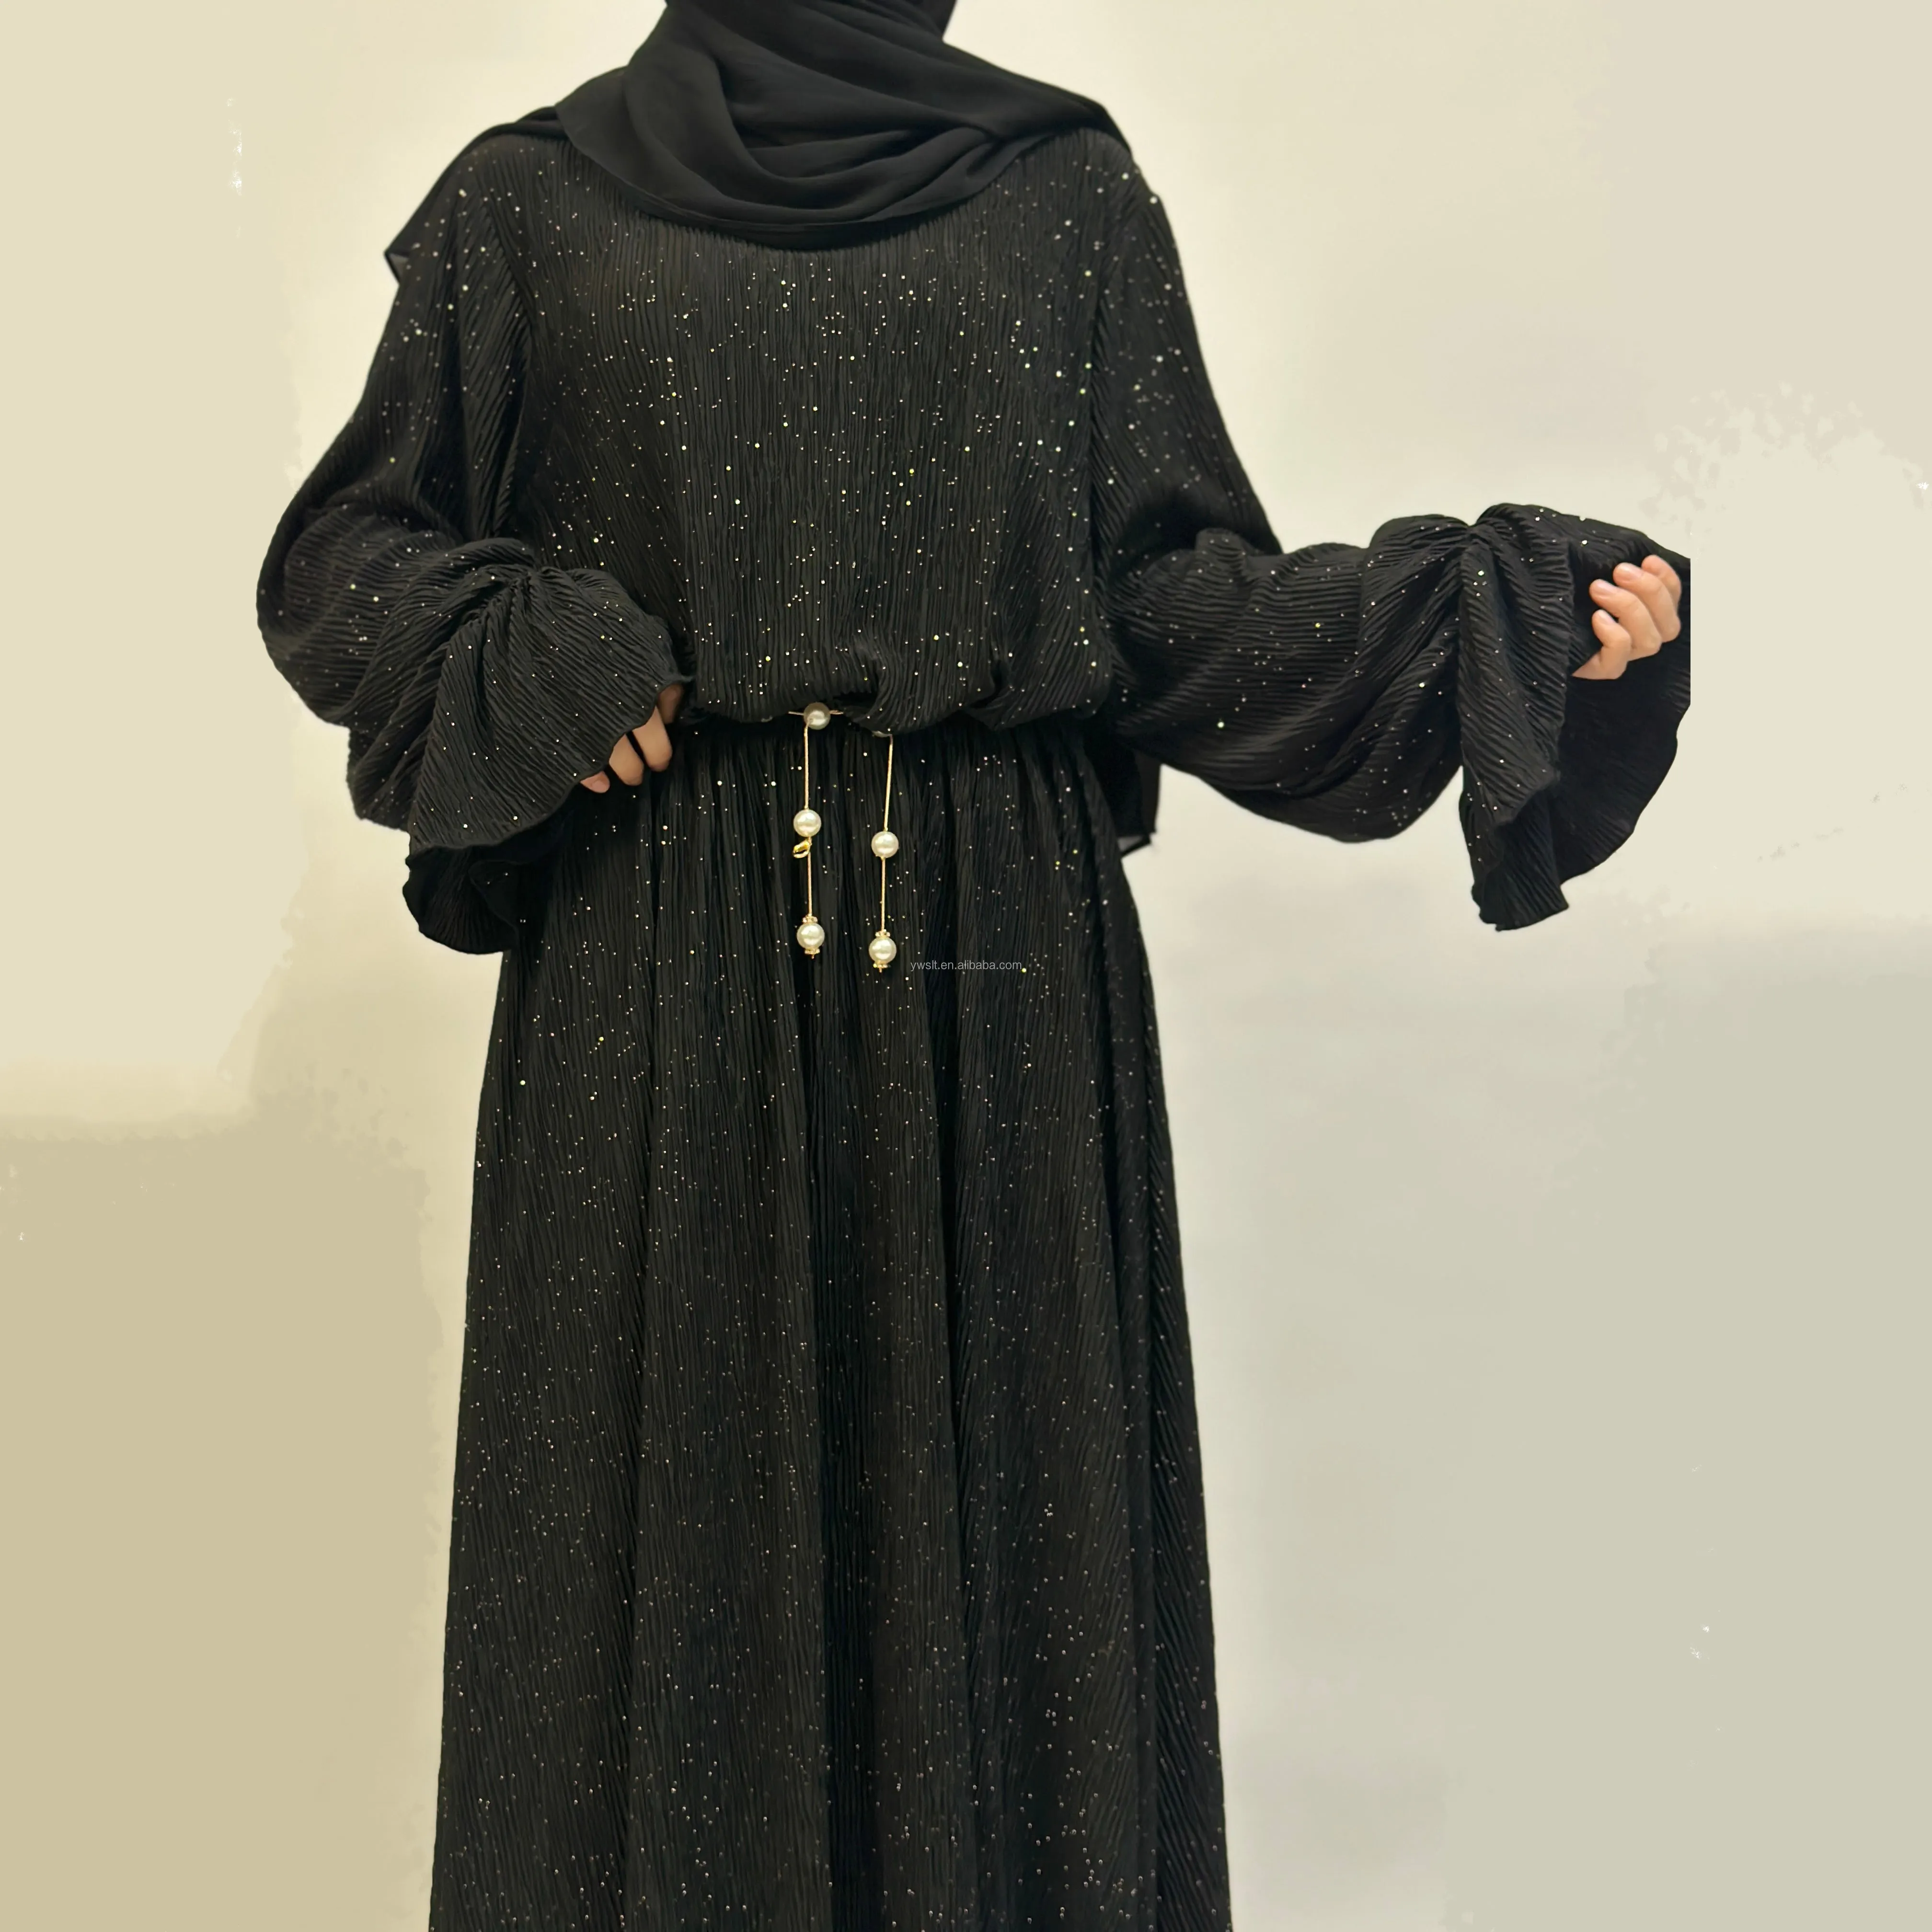 Atacado Personalizado Abaya Turquia Senhoras Vestuário Islâmico Luxo Elegante Bling Sparkly Plissado Abaya Mulheres Vestido Muçulmano Dubai Abaya